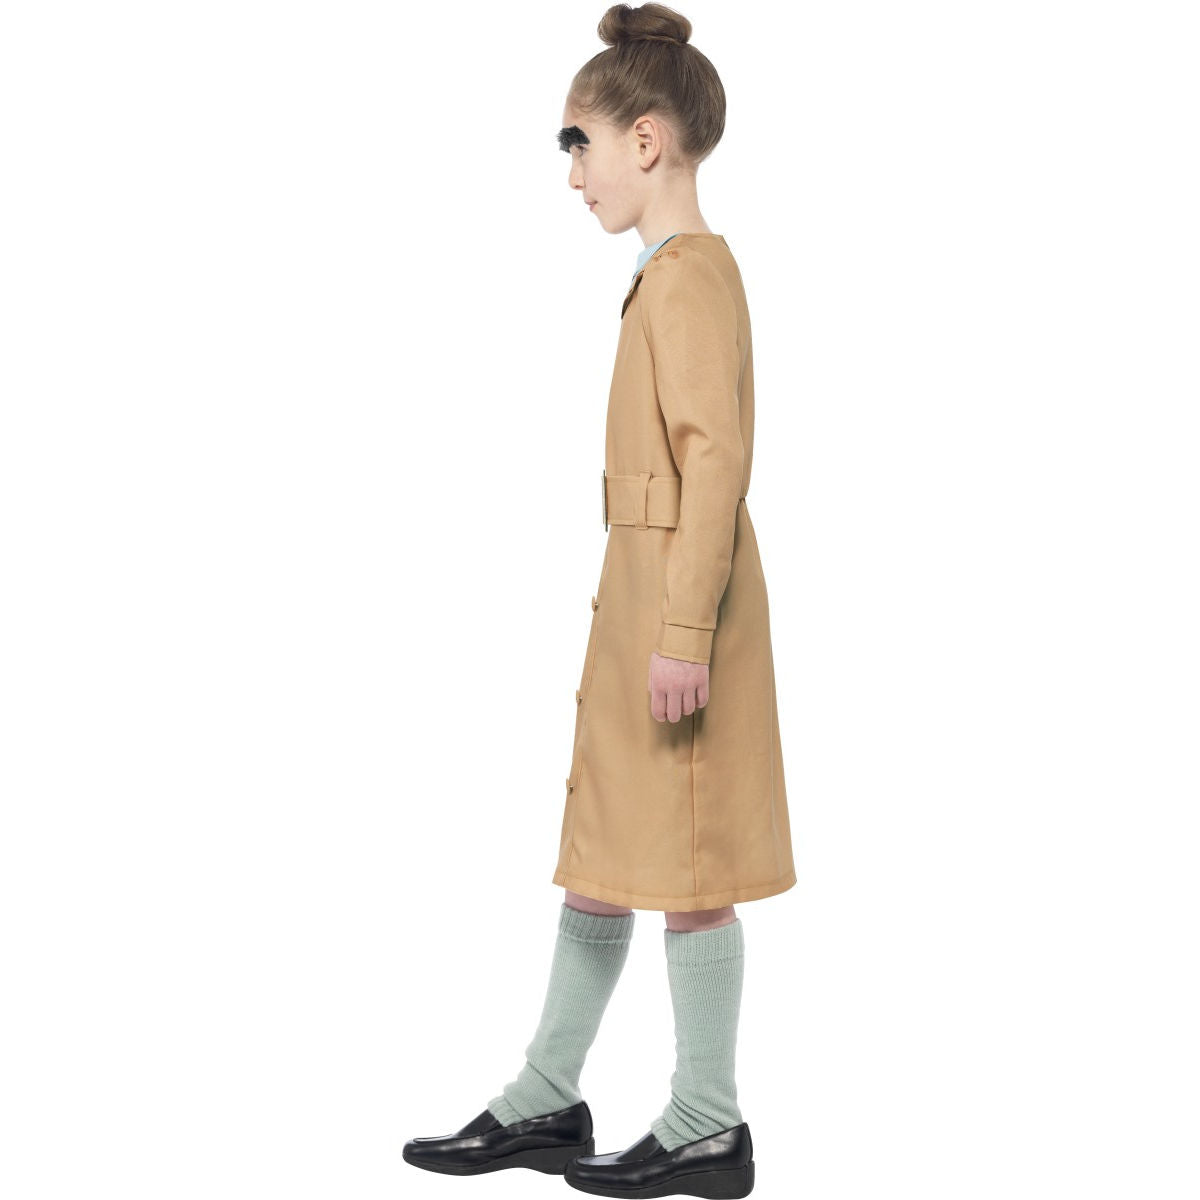 Roald Dahl Miss Trunchbull Children's Costume with Leg Warmers & Eyebrows